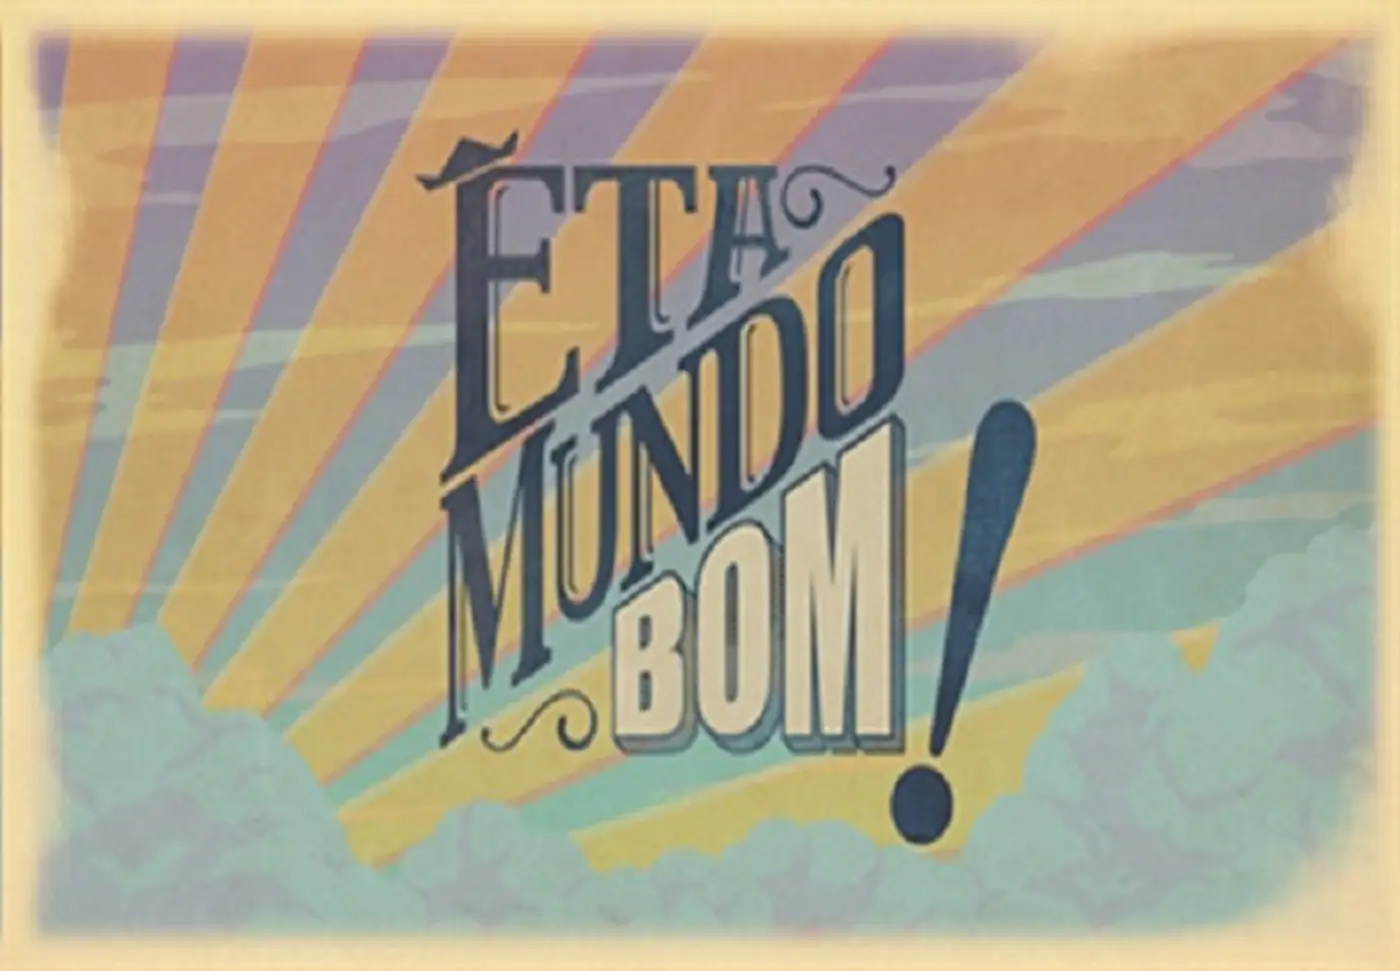 Eta Mundo Bom Logo